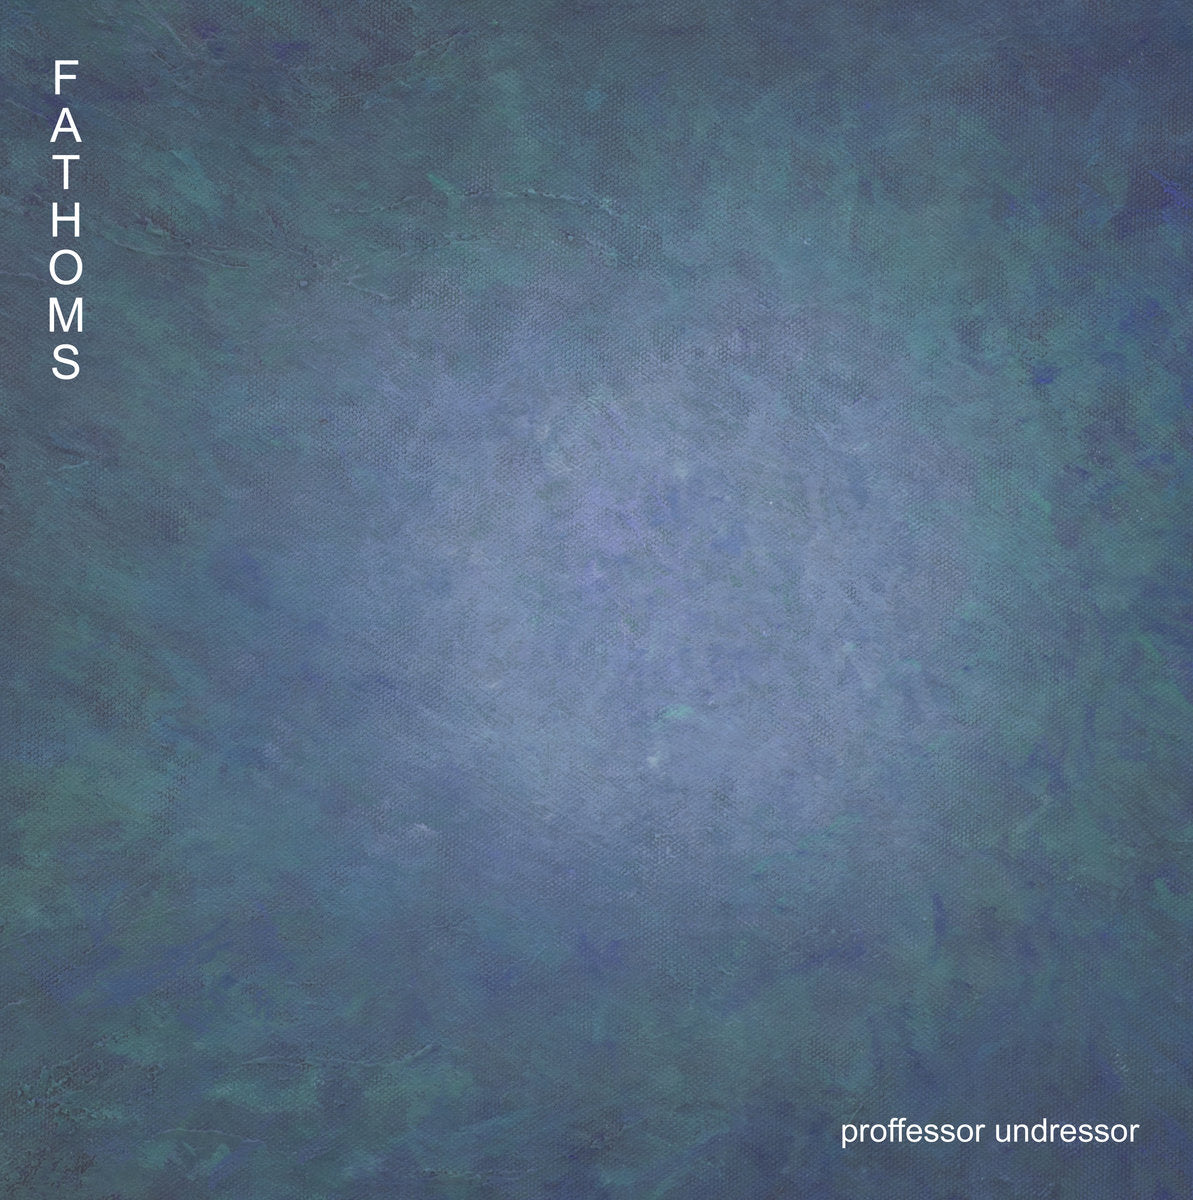 Proffessor Undressor/Fathoms (Descent Blue Vinyl) [LP]